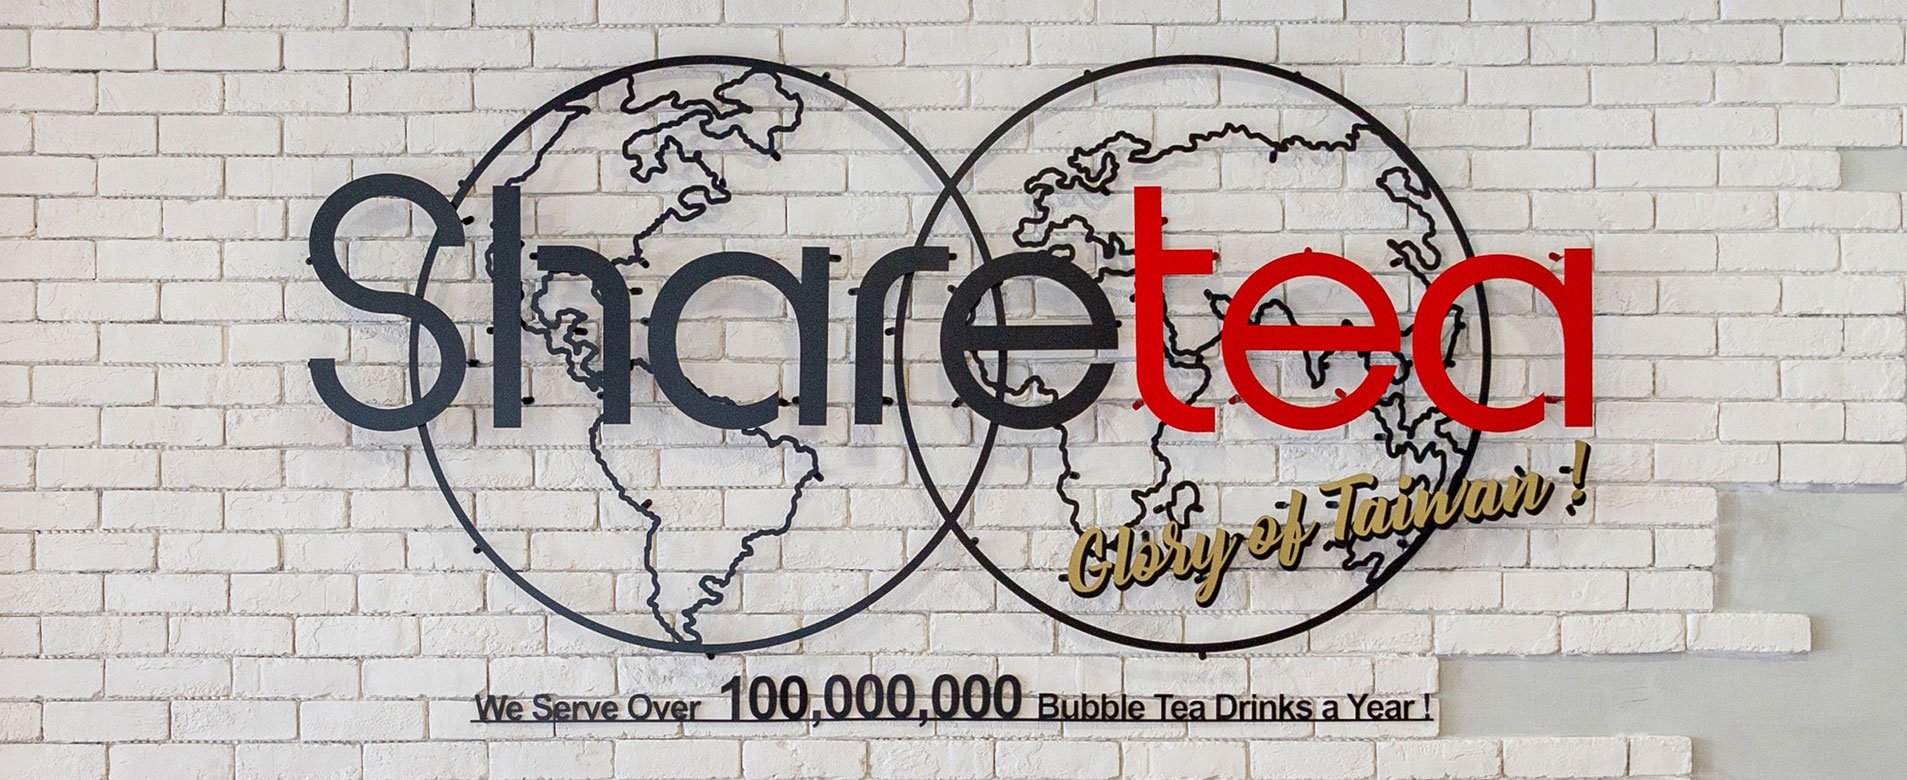 Bubble tea - Wikipedia